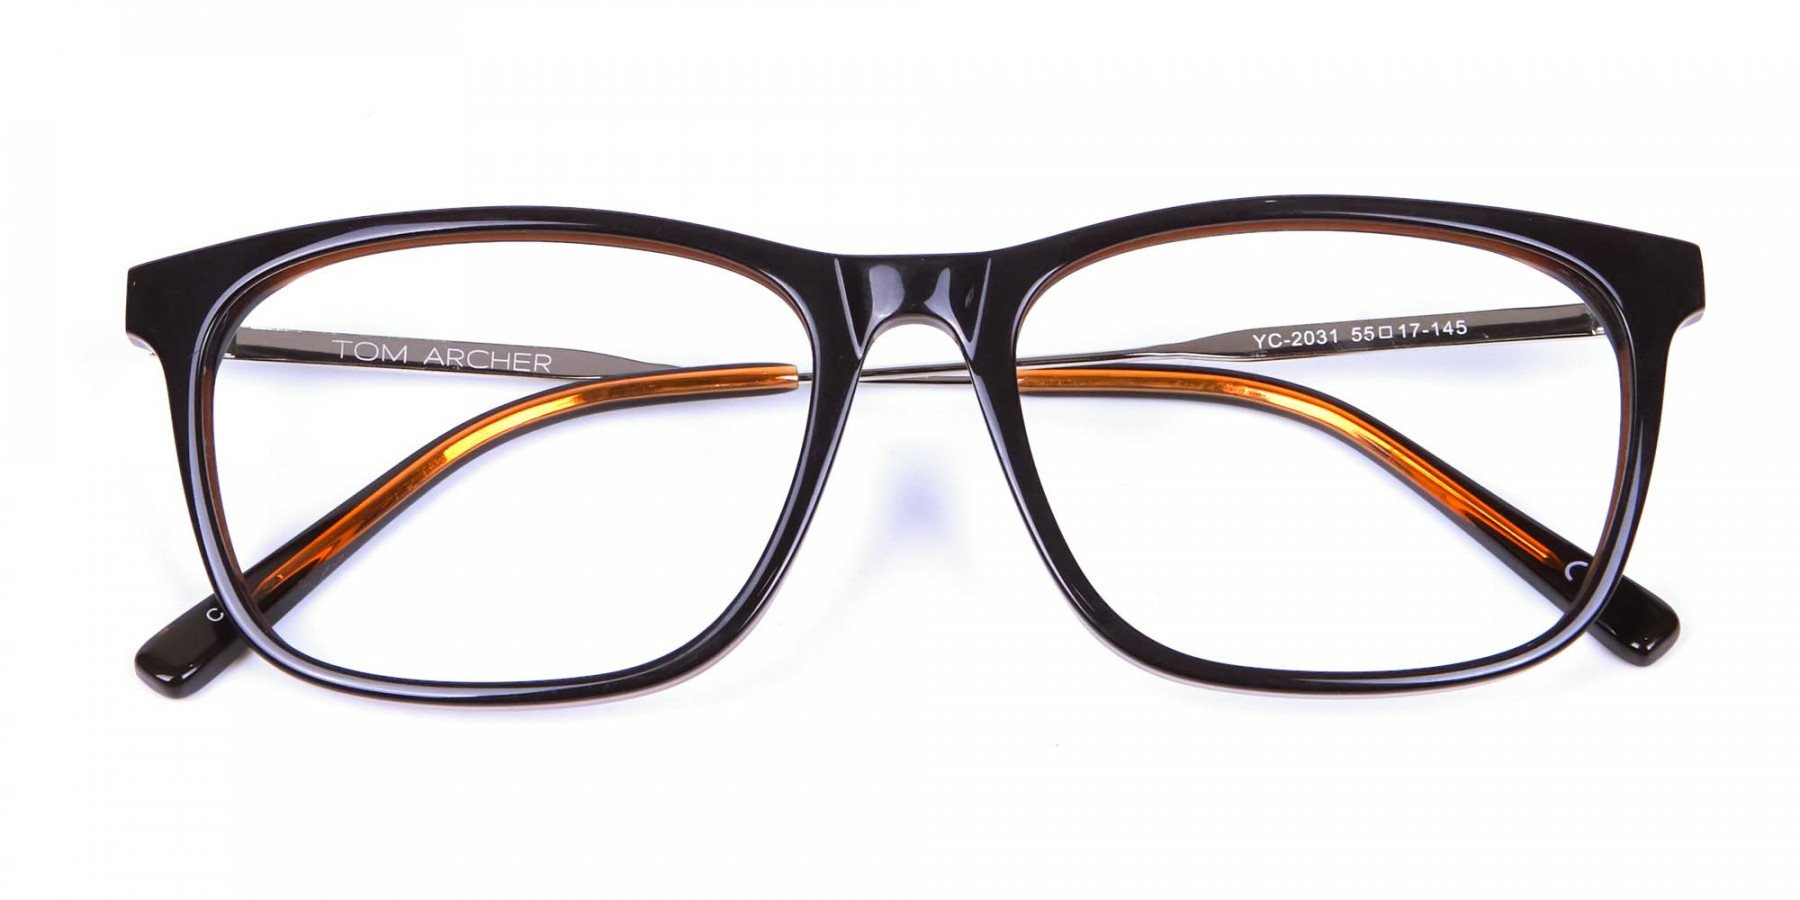 Colour Mixed Rectangular Glasses - 1